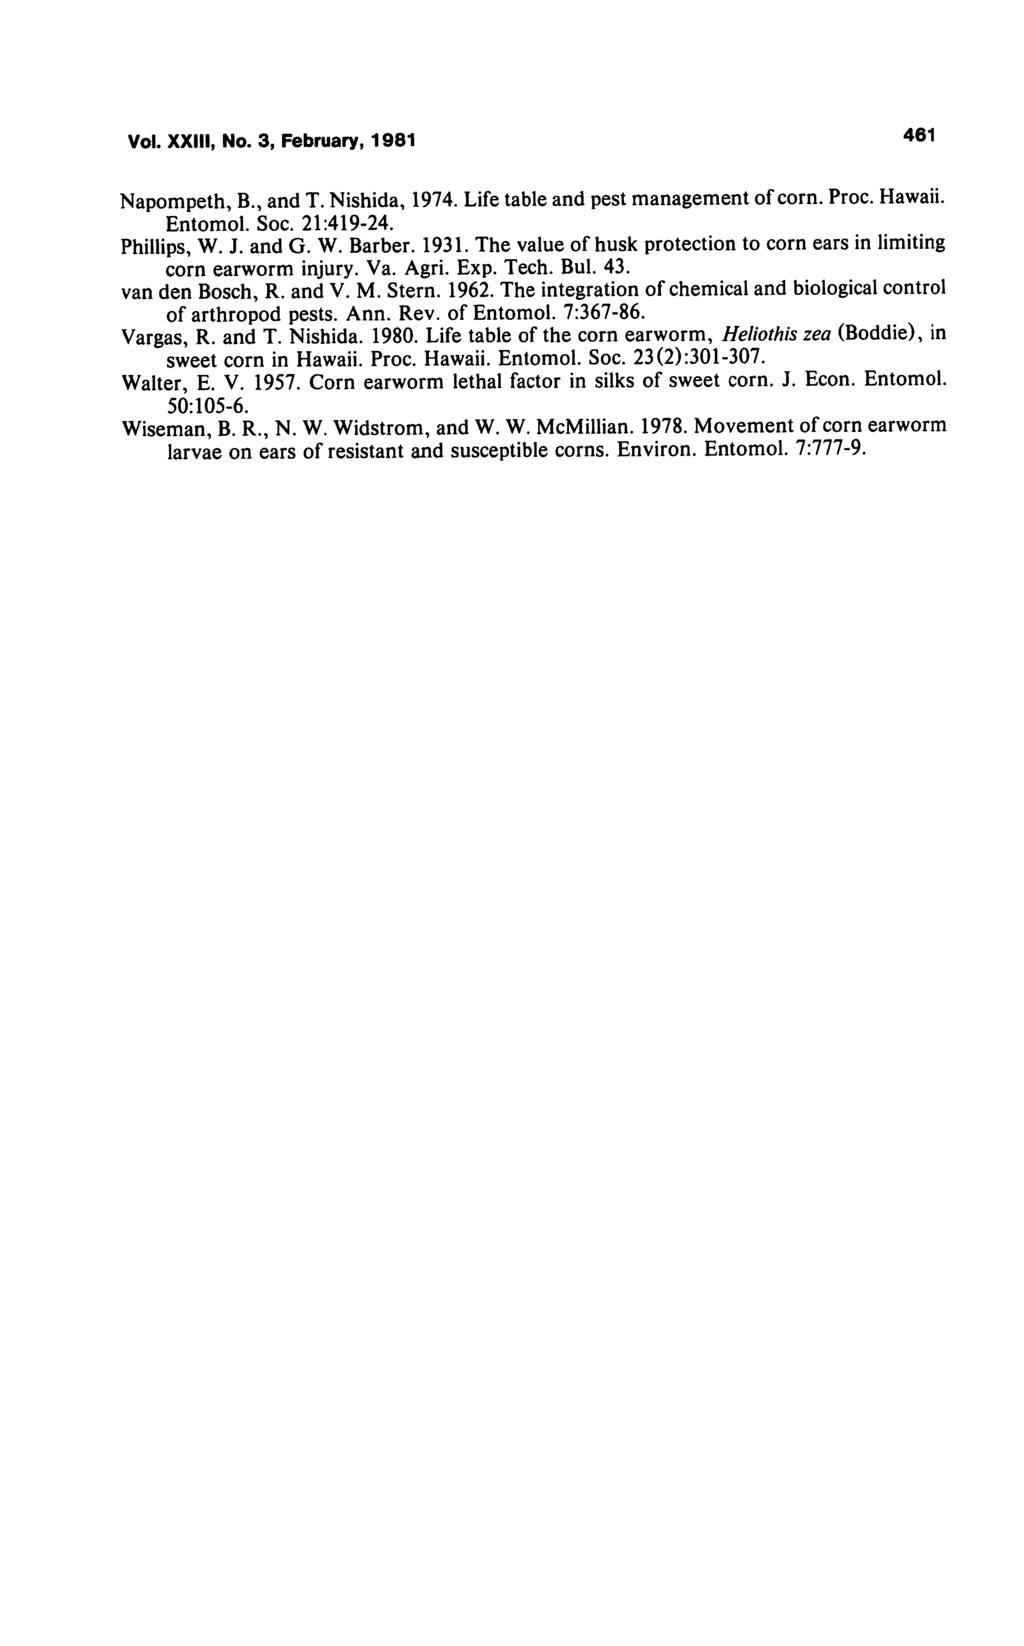 Vol. XXIII, No. 3, February, 1981 461 Napompeth, B., and T. Nishida, 1974. Life table and pest management of corn. Proc. Hawaii. Entomol. Soc. 21:419-24. Phillips, W. J. and G. W. Barber. 1931.